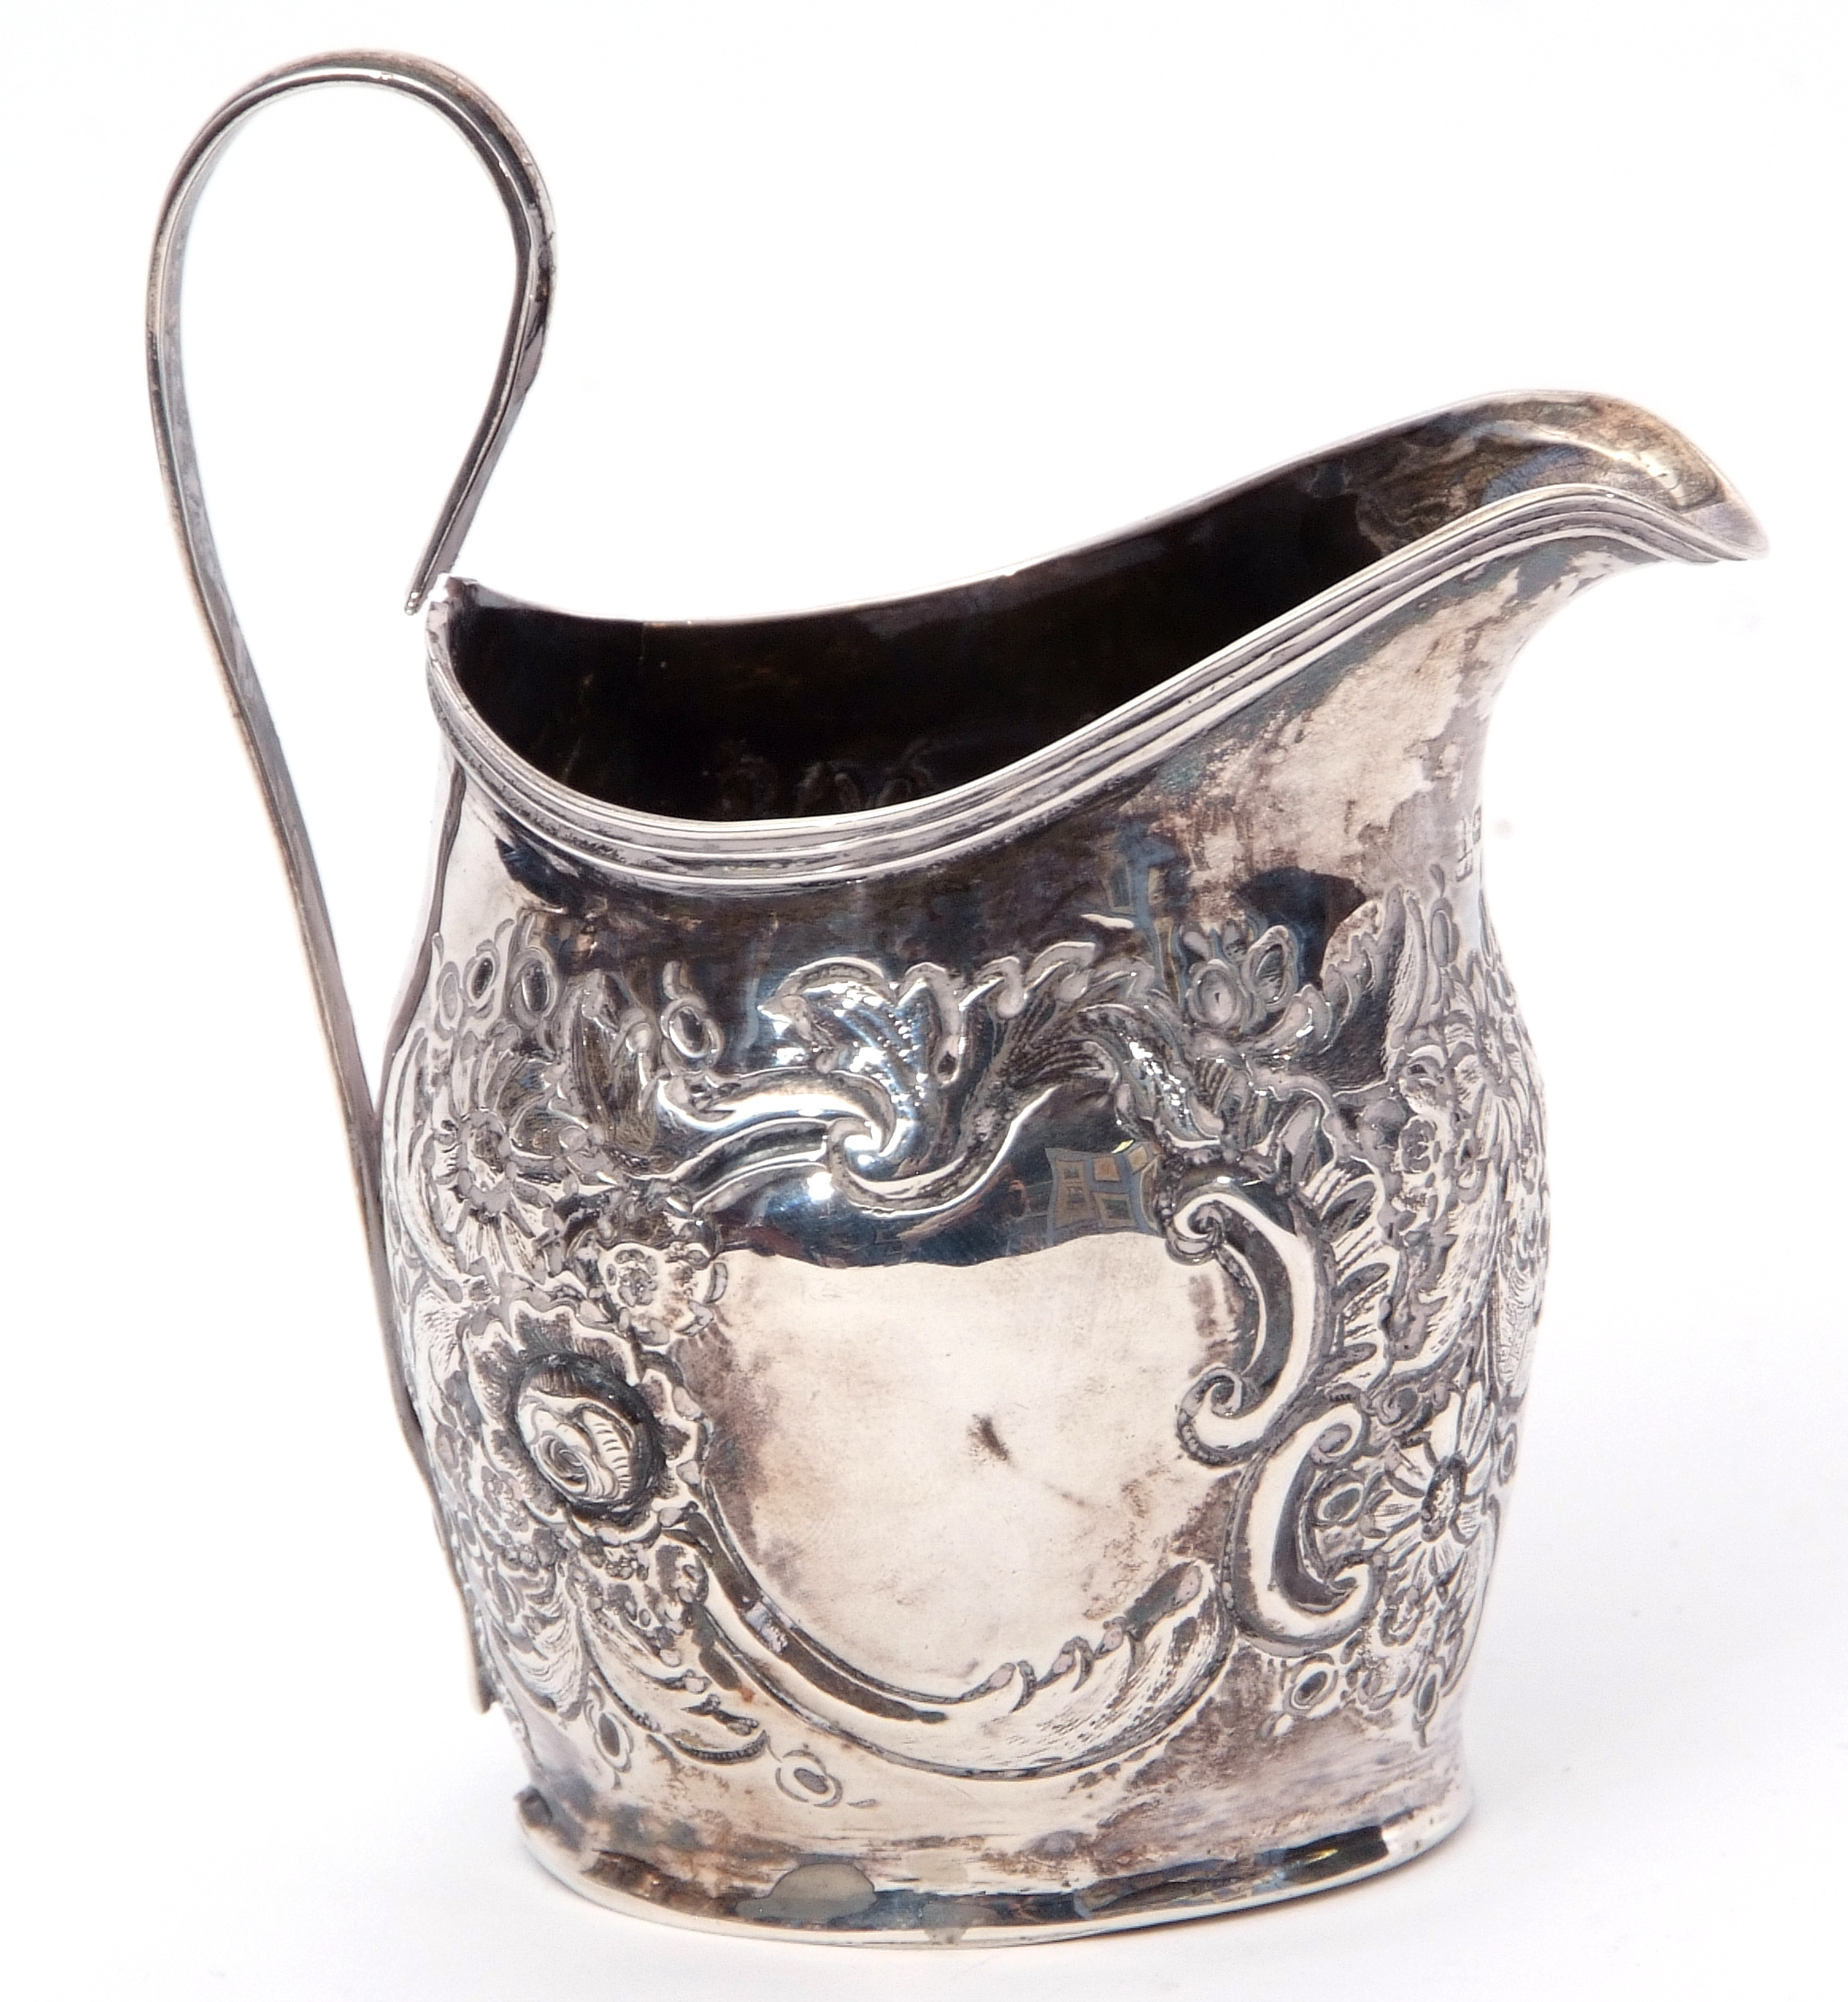 George III helmet cream jug, later embossed with floral and foliate design, reeded looped handle, - Image 2 of 2